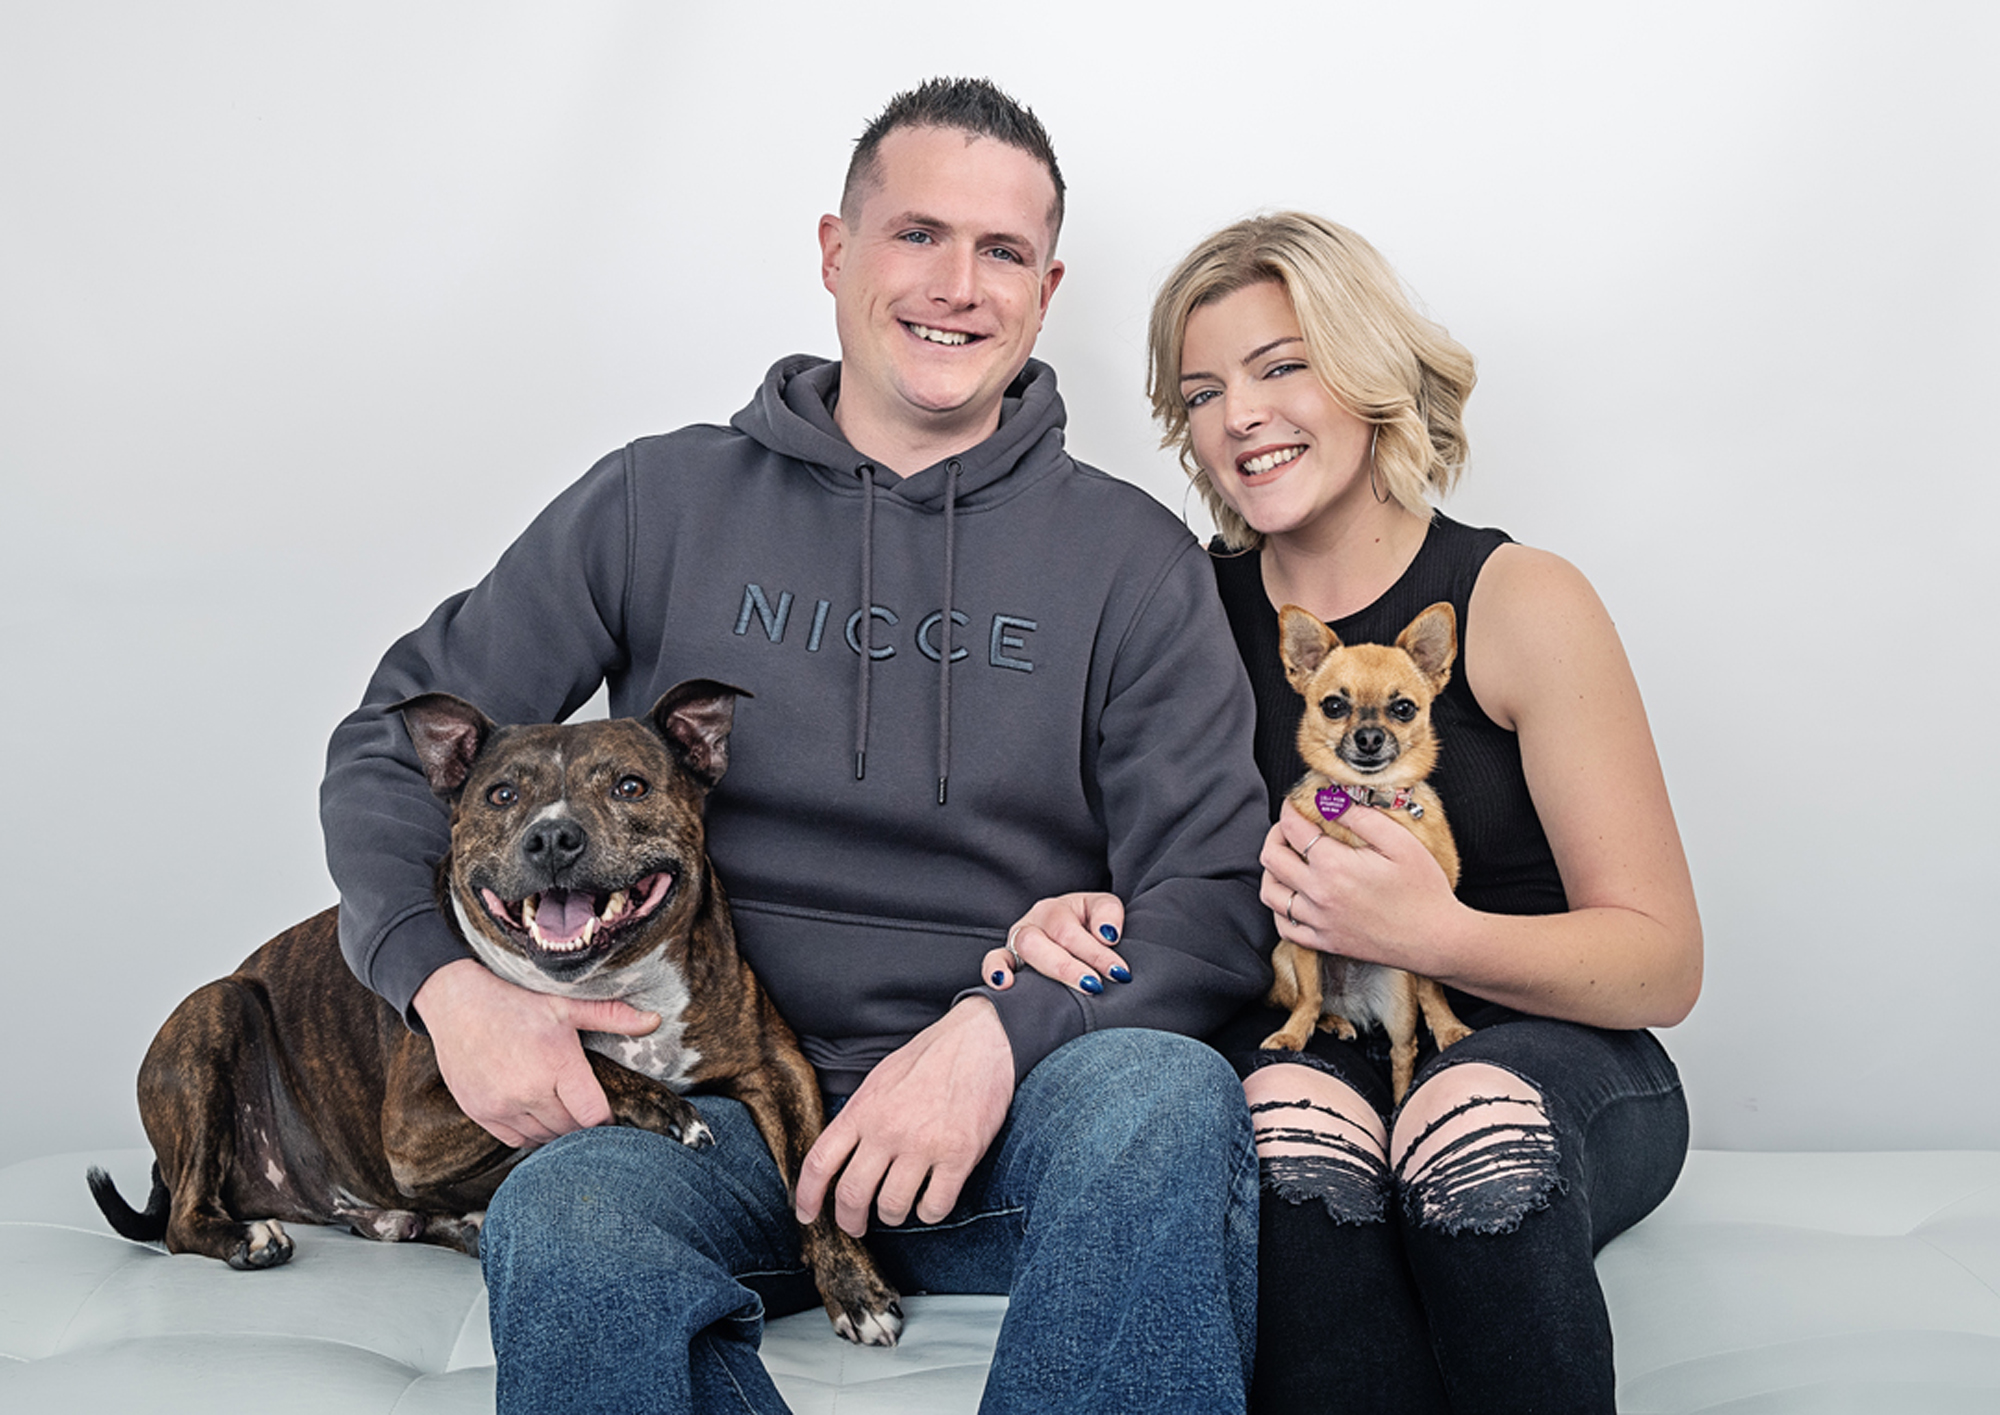 Family photos with dog